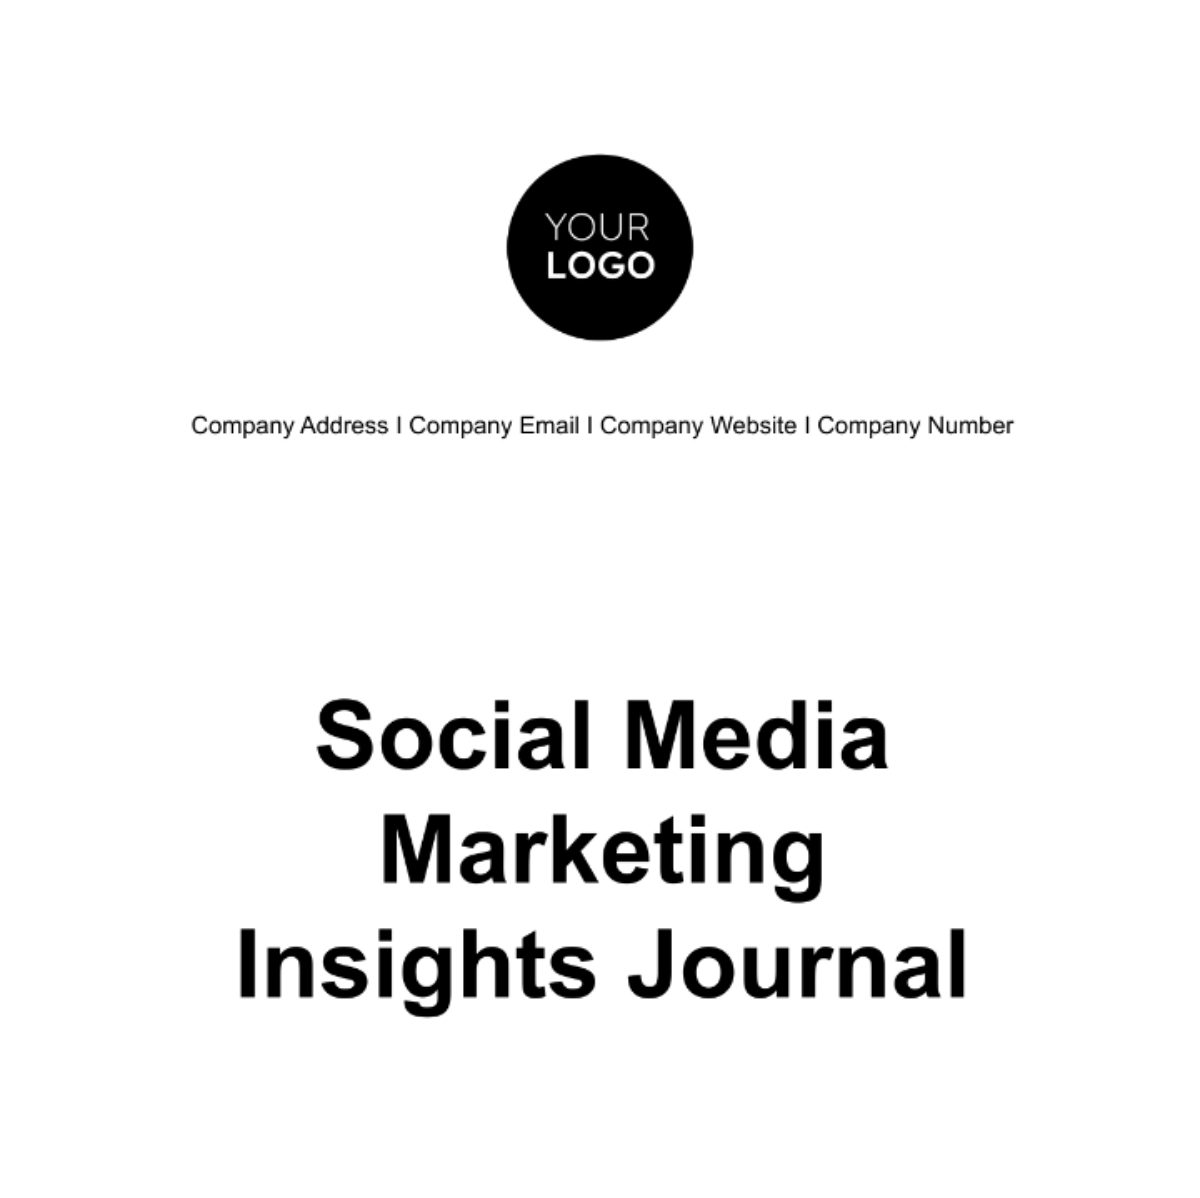 Social Media Marketing Insights Journal Template